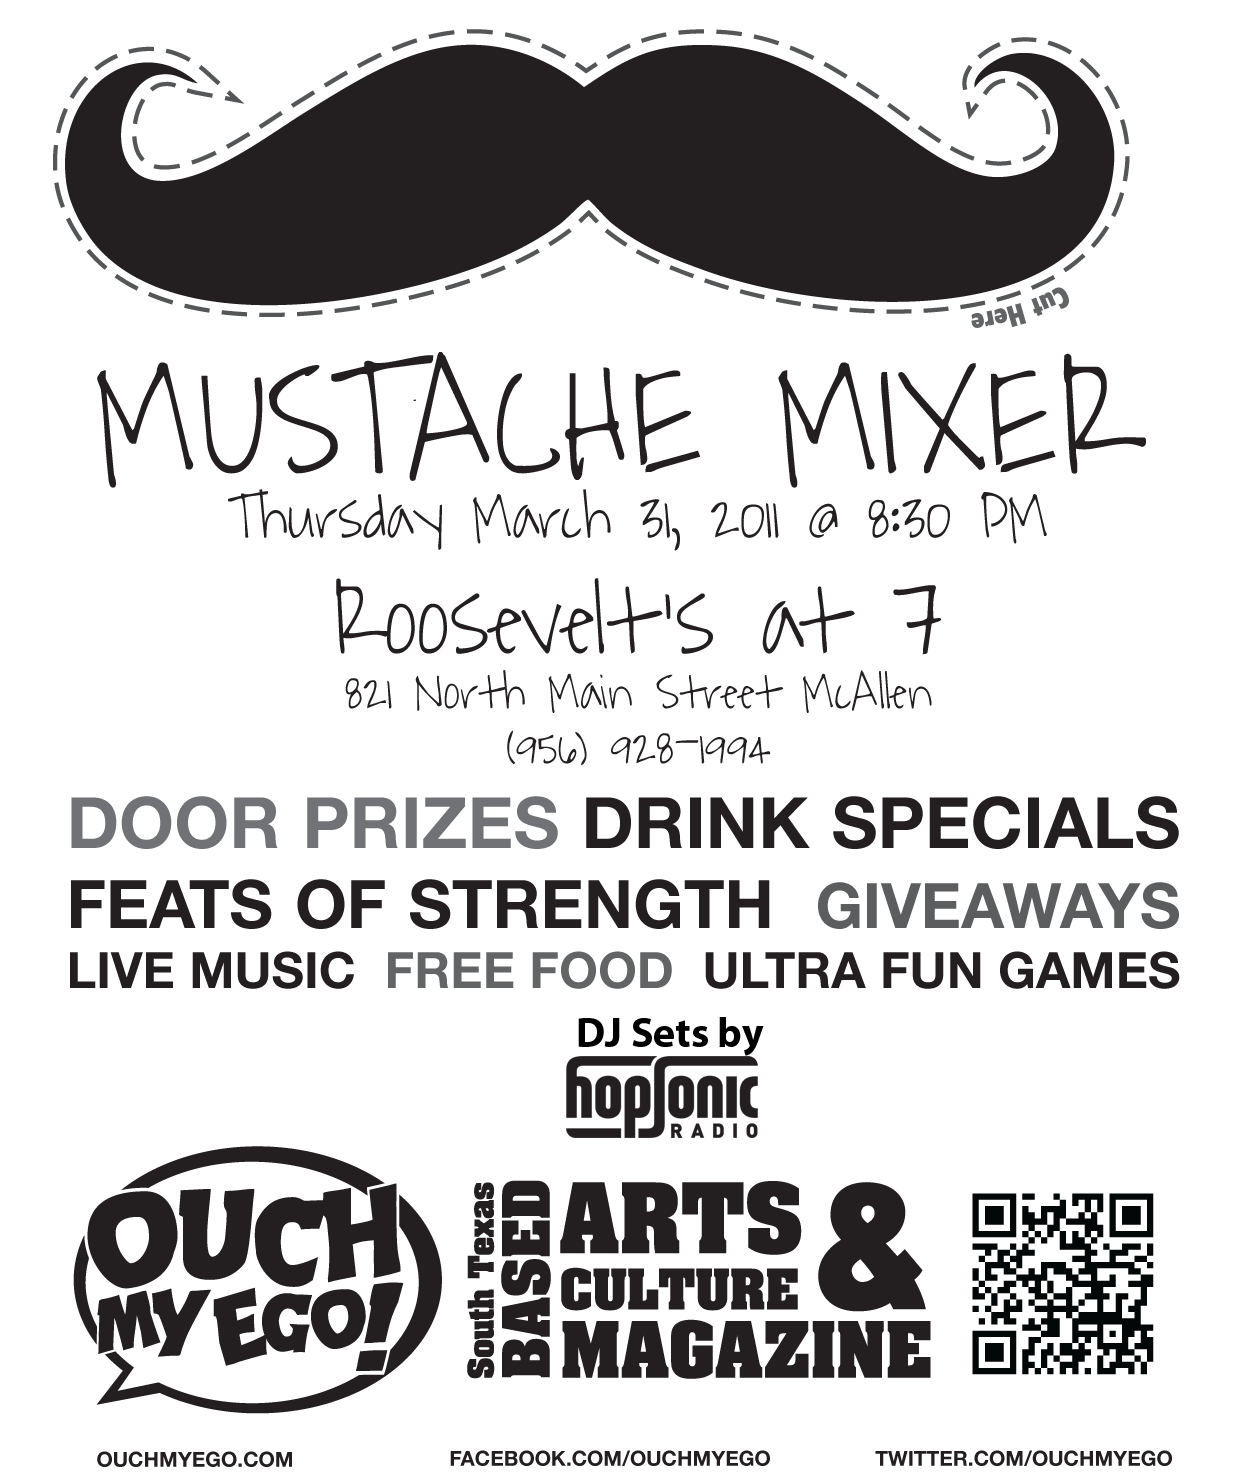 Mustache Mixer Flyer